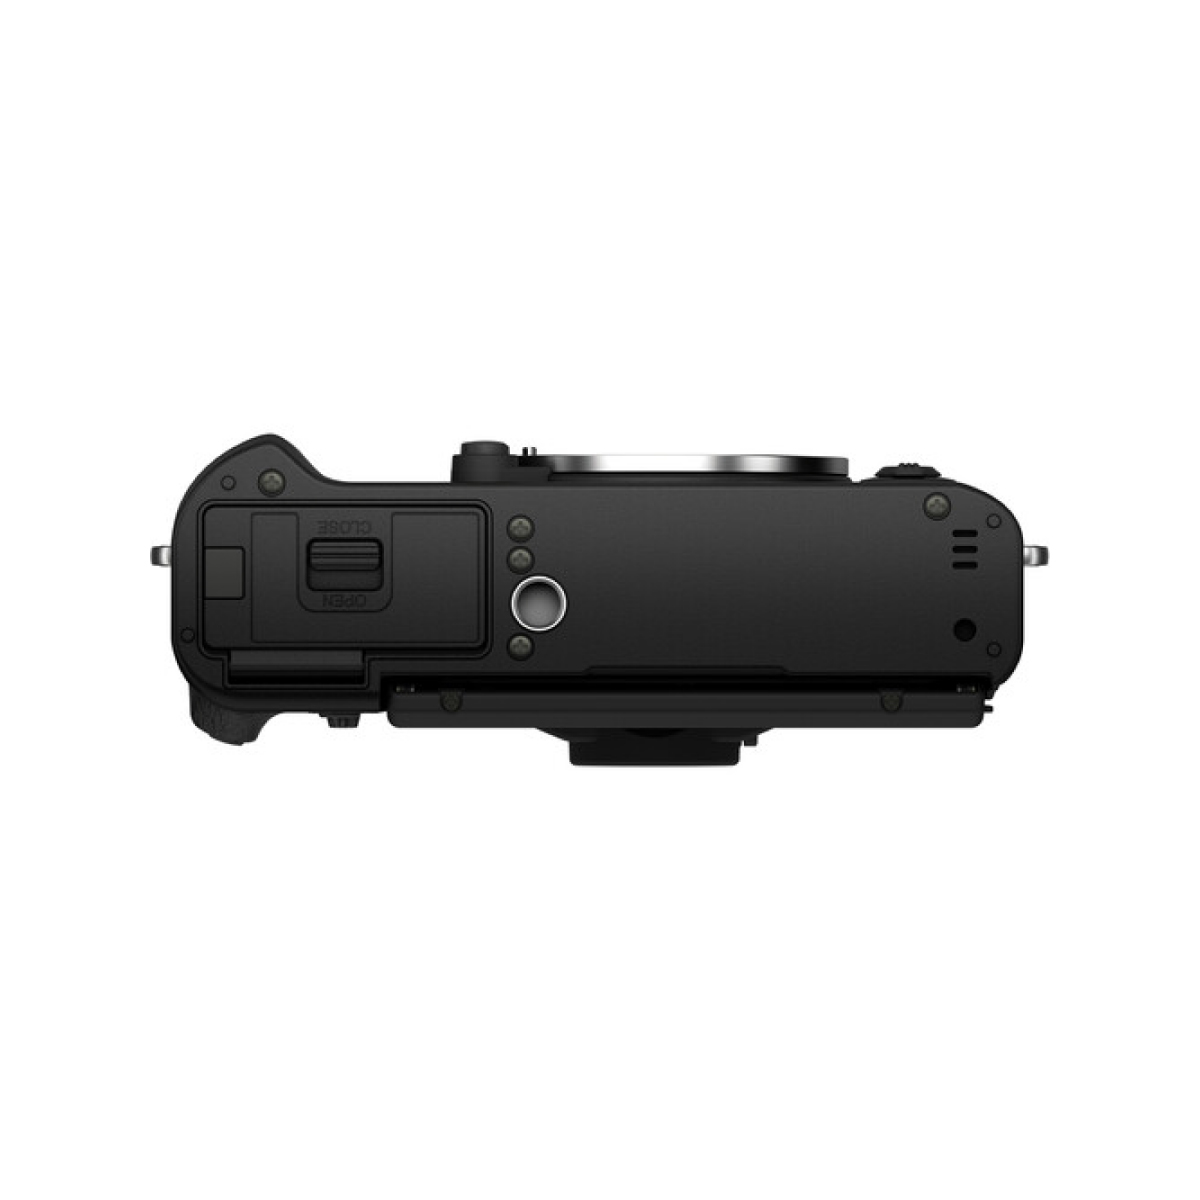 Fujifilm X-T30 II Camera Body With XF15-45mm Lens – Black (5)